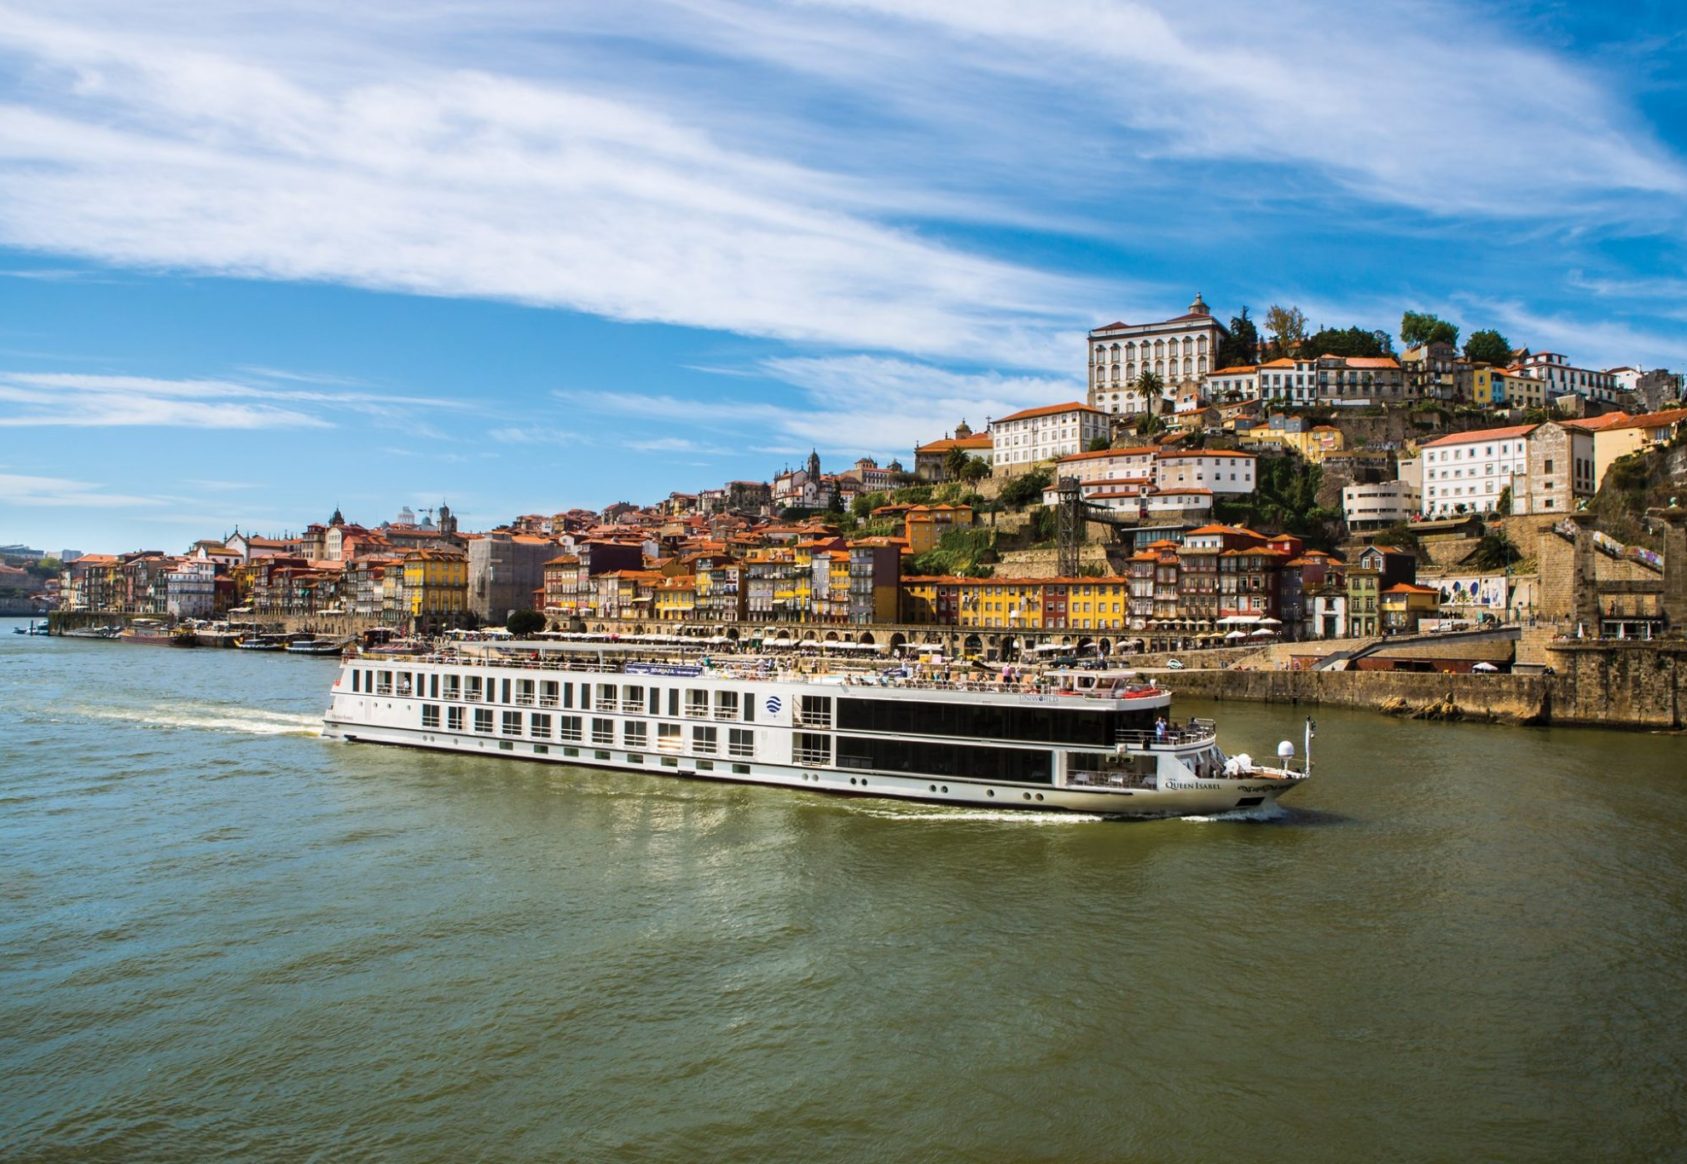 uniworld river cruise to portugal